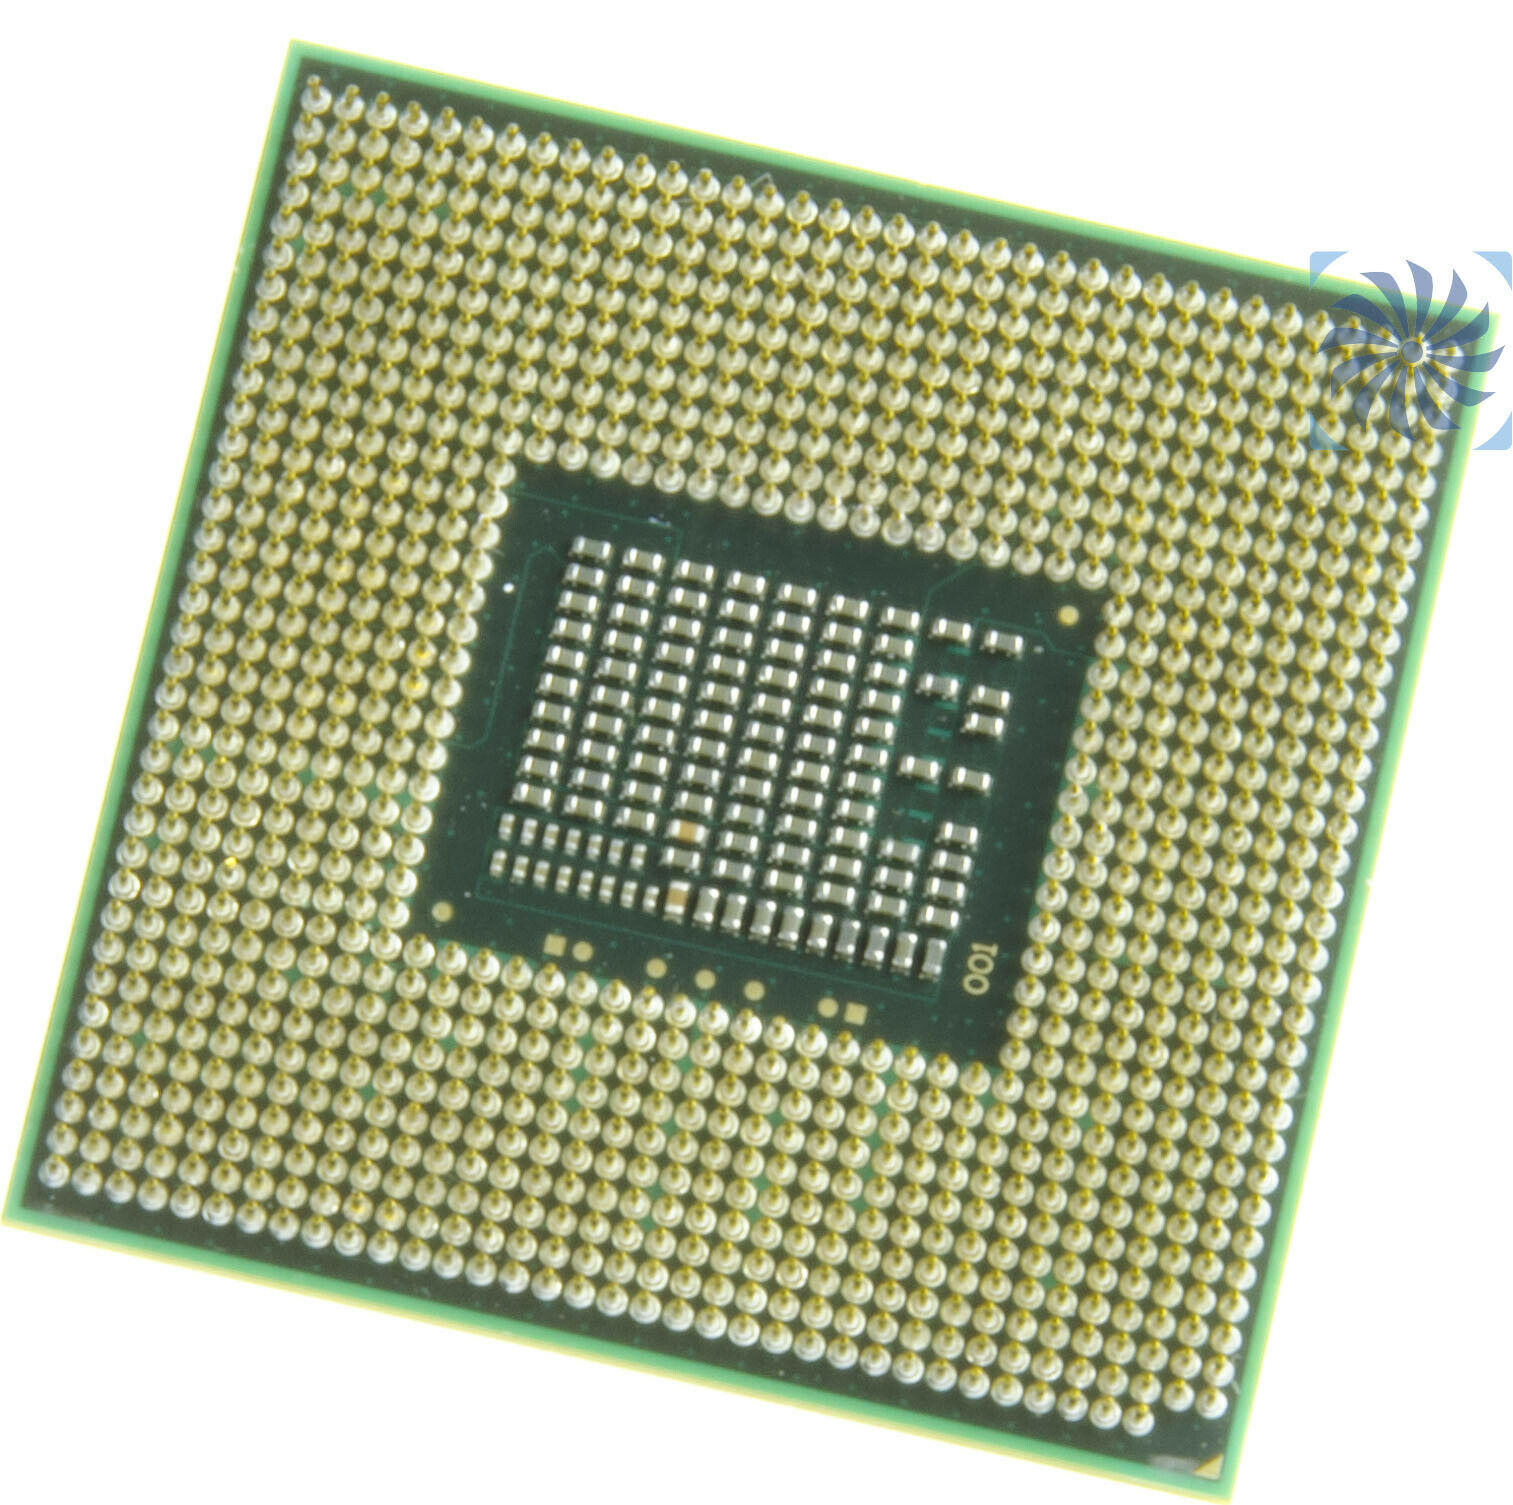 Intel i3 какой сокет. Intel Core i3 2310. Intel Core i3 2350m. Intel Core i5 3210m 2.50GHZ. Intel Core i5 3210m 2.50 ГГЦ.